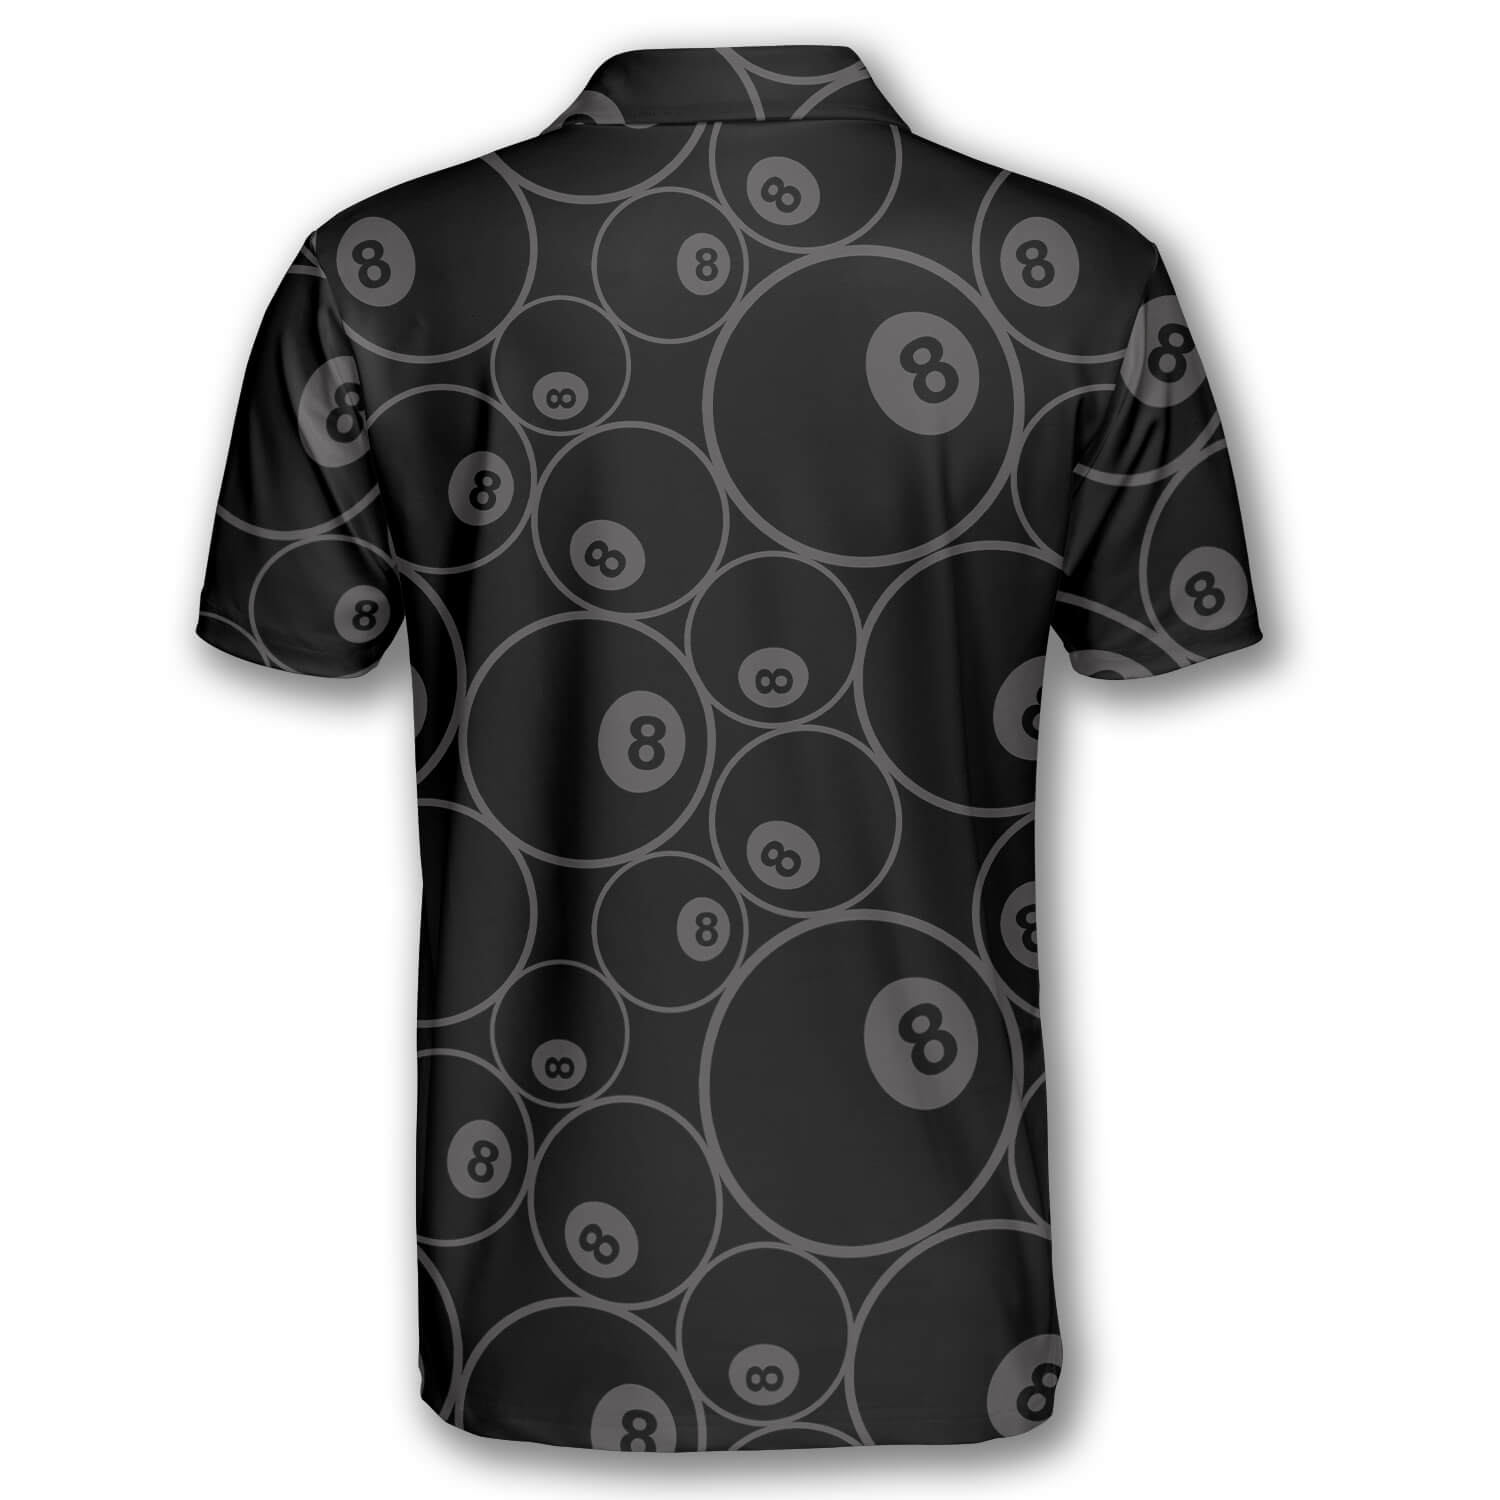 Billiards Pool Snooker Heartbeat Pattern Billiard Shirts for Men Billiard Polo Shirt